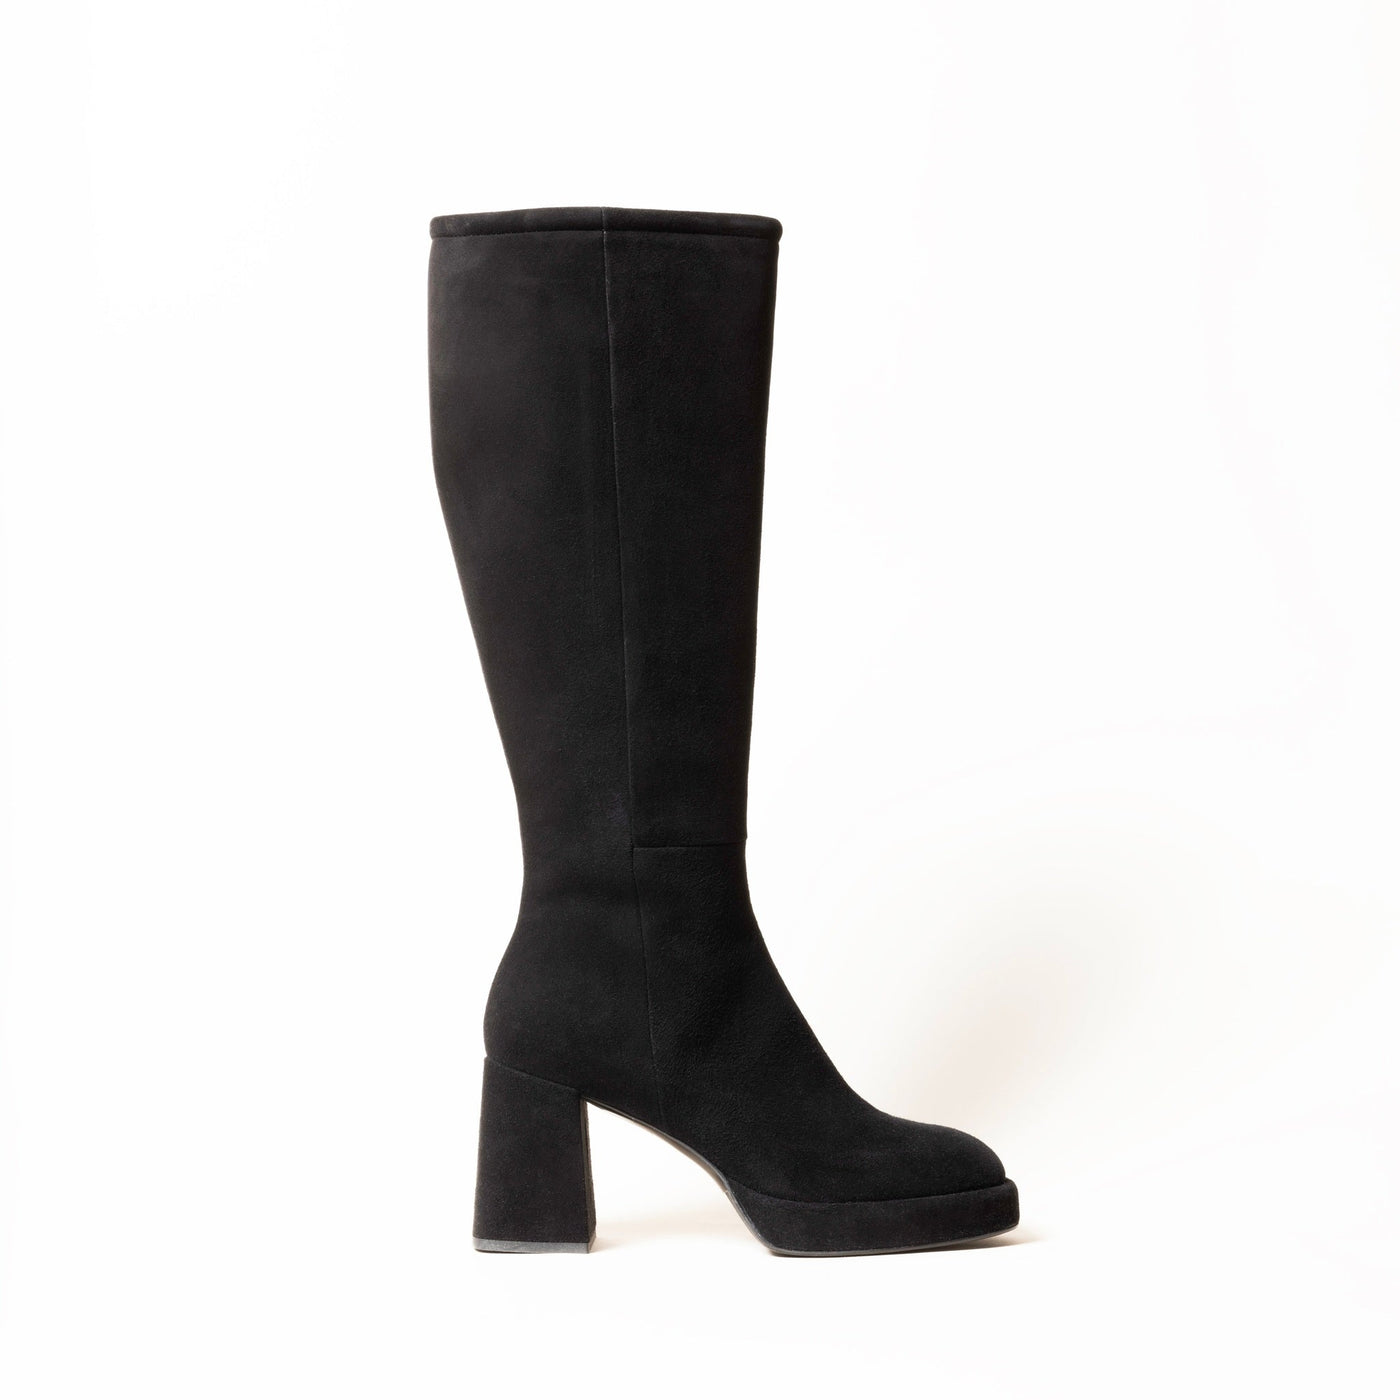 Black platform heeled knee high boots.